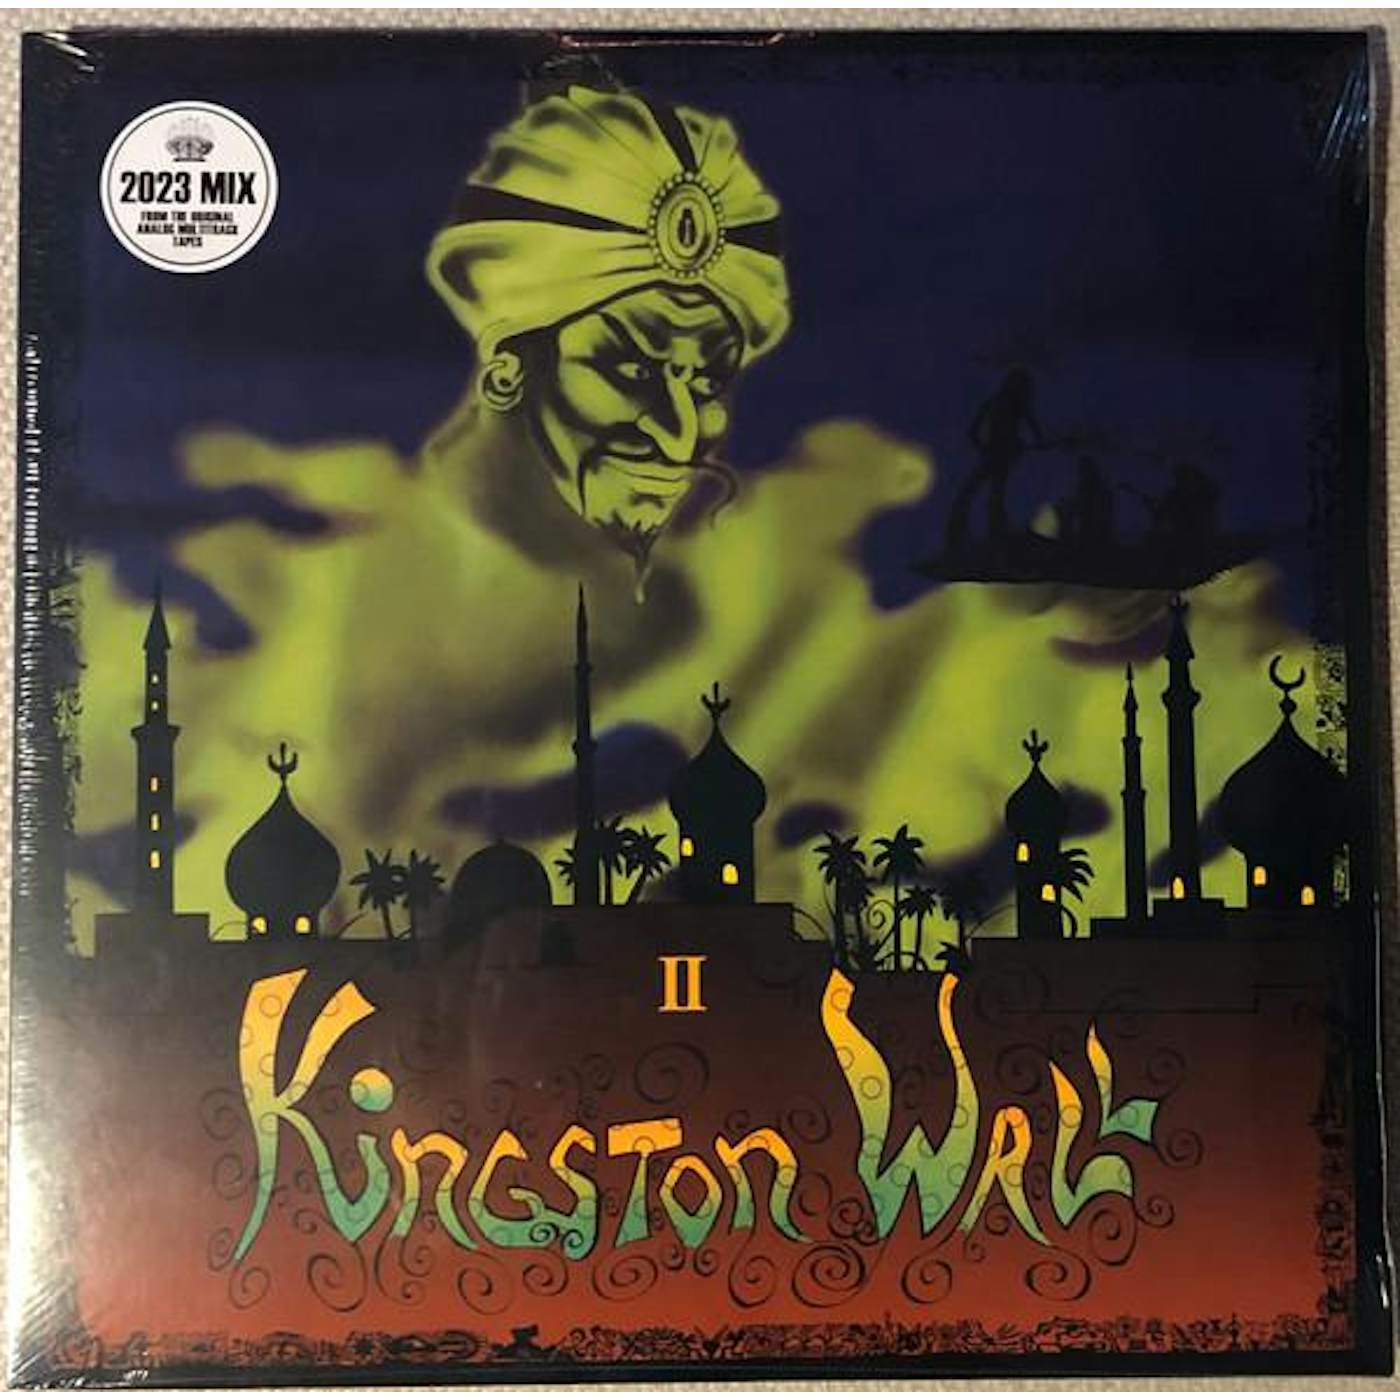 Kingston Wall II Vinyl Record